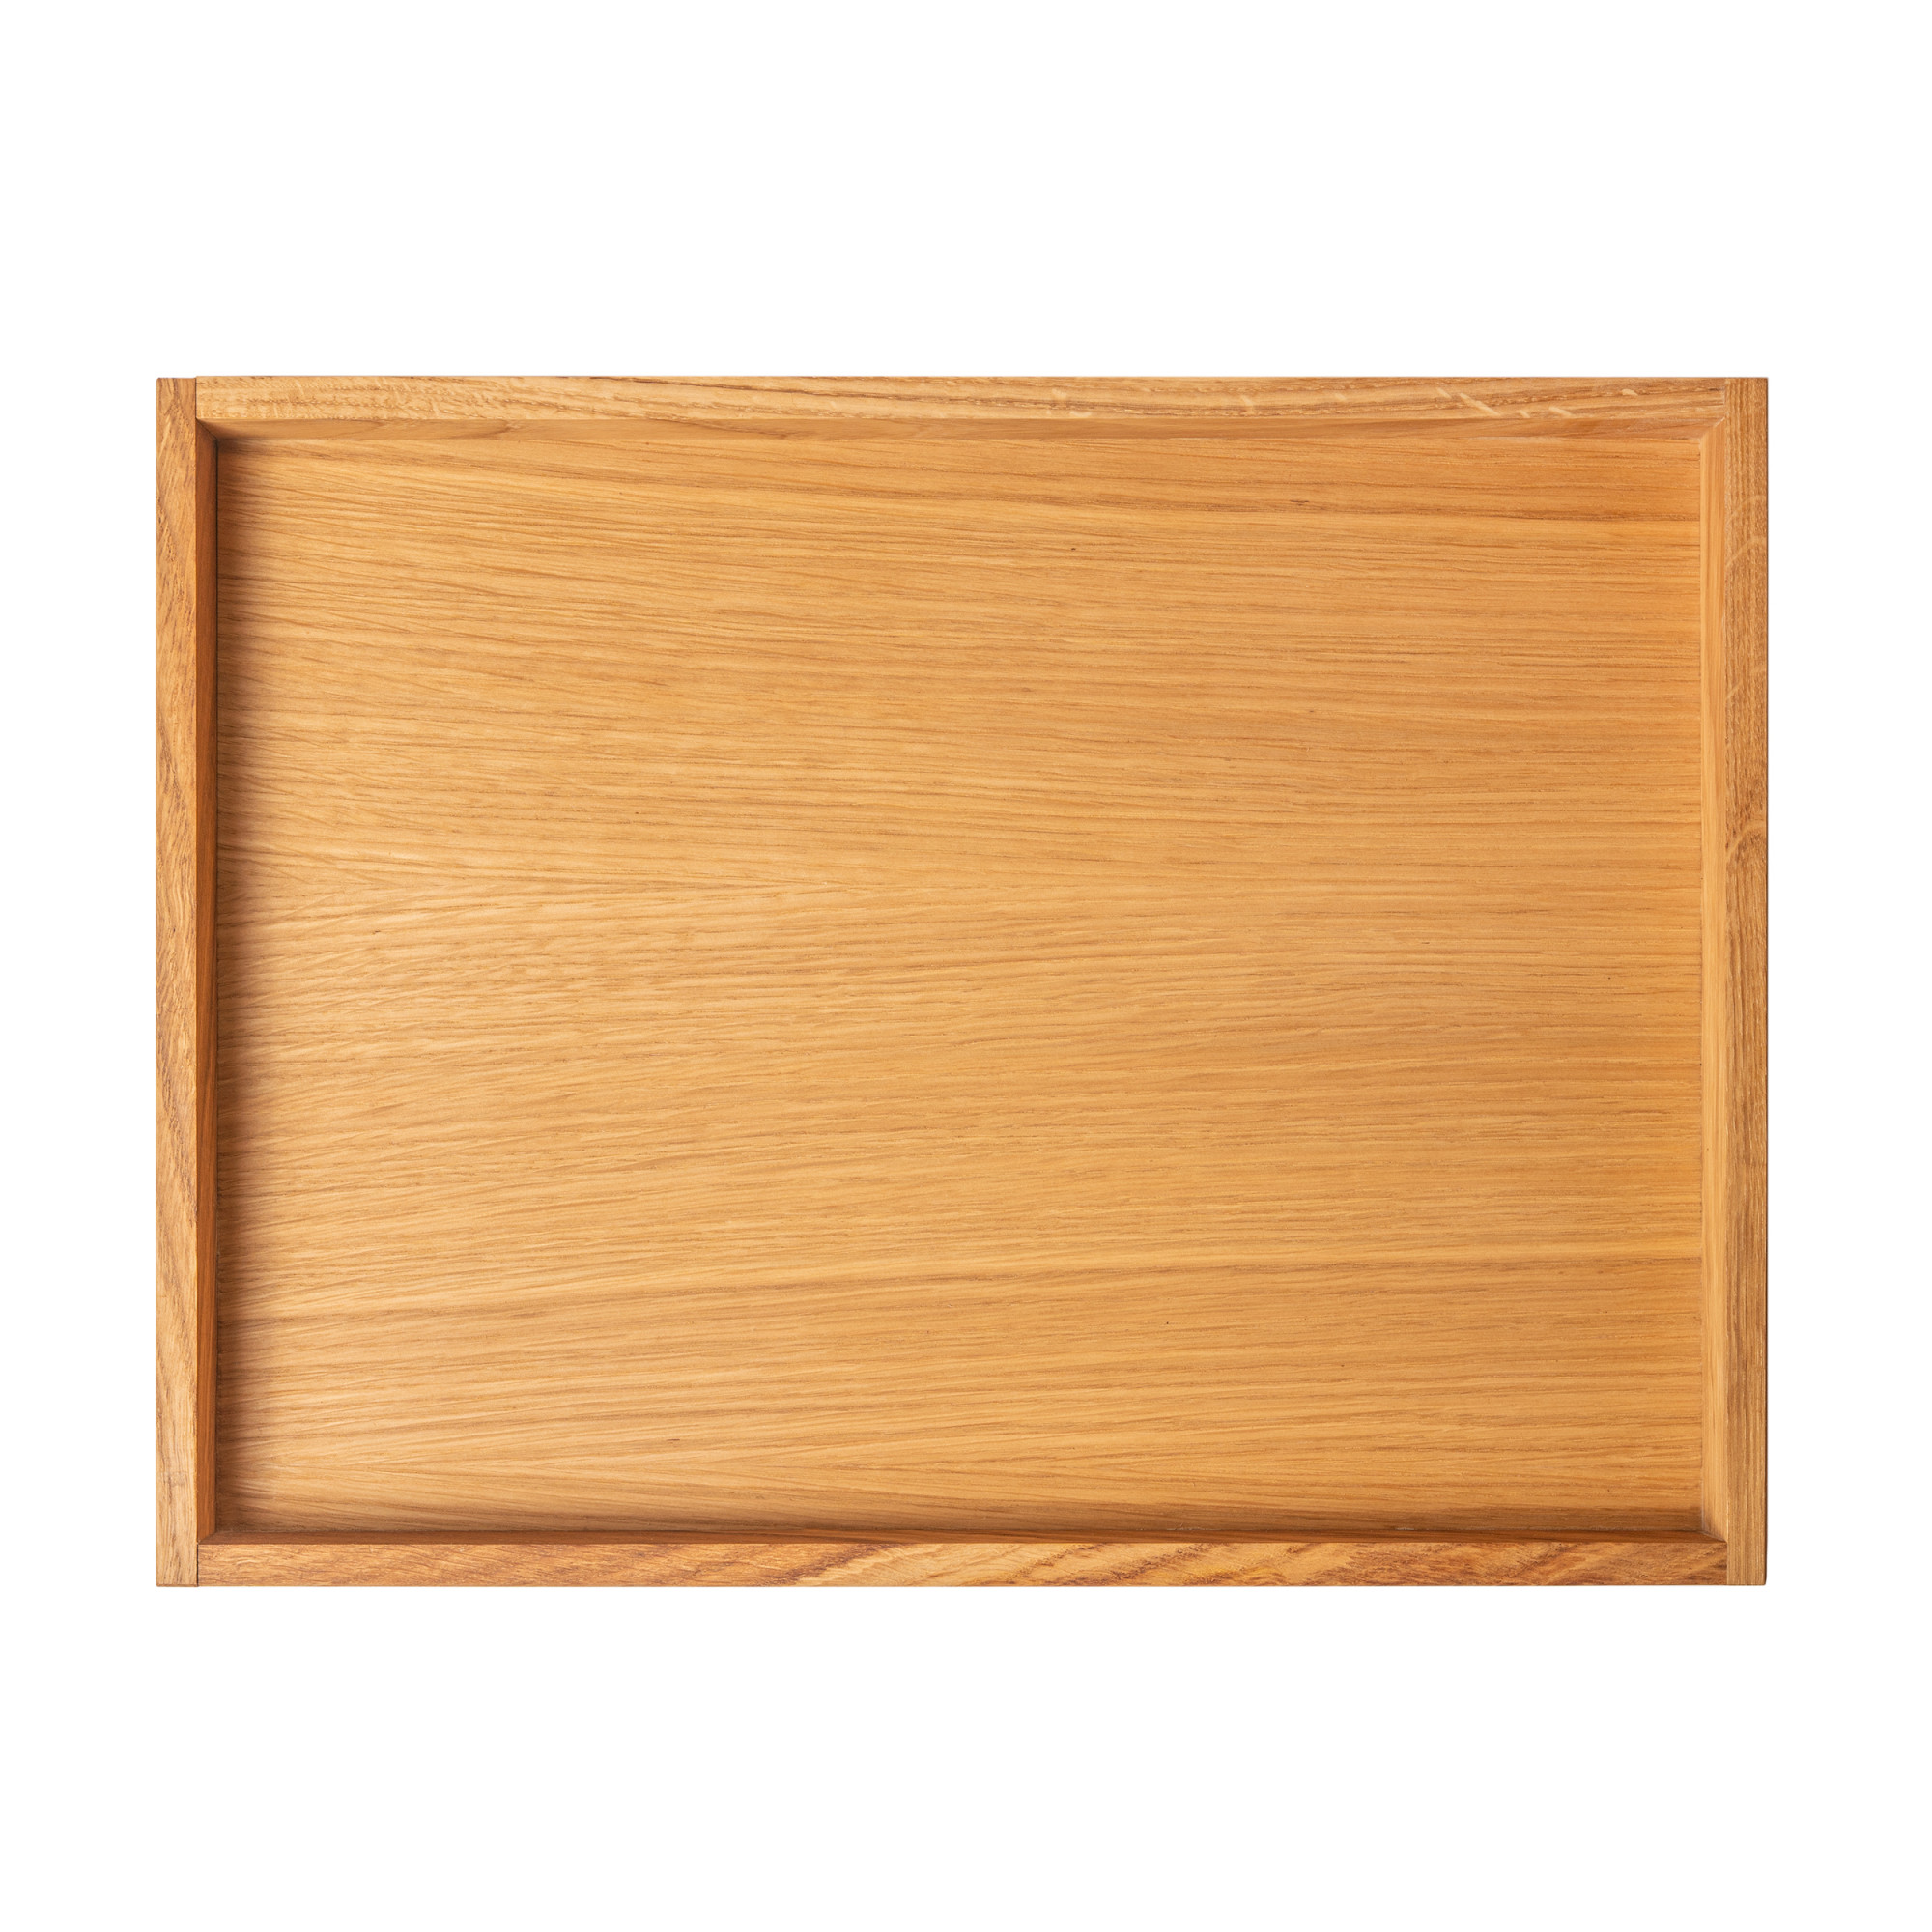 Oak medium wooden tray on white background